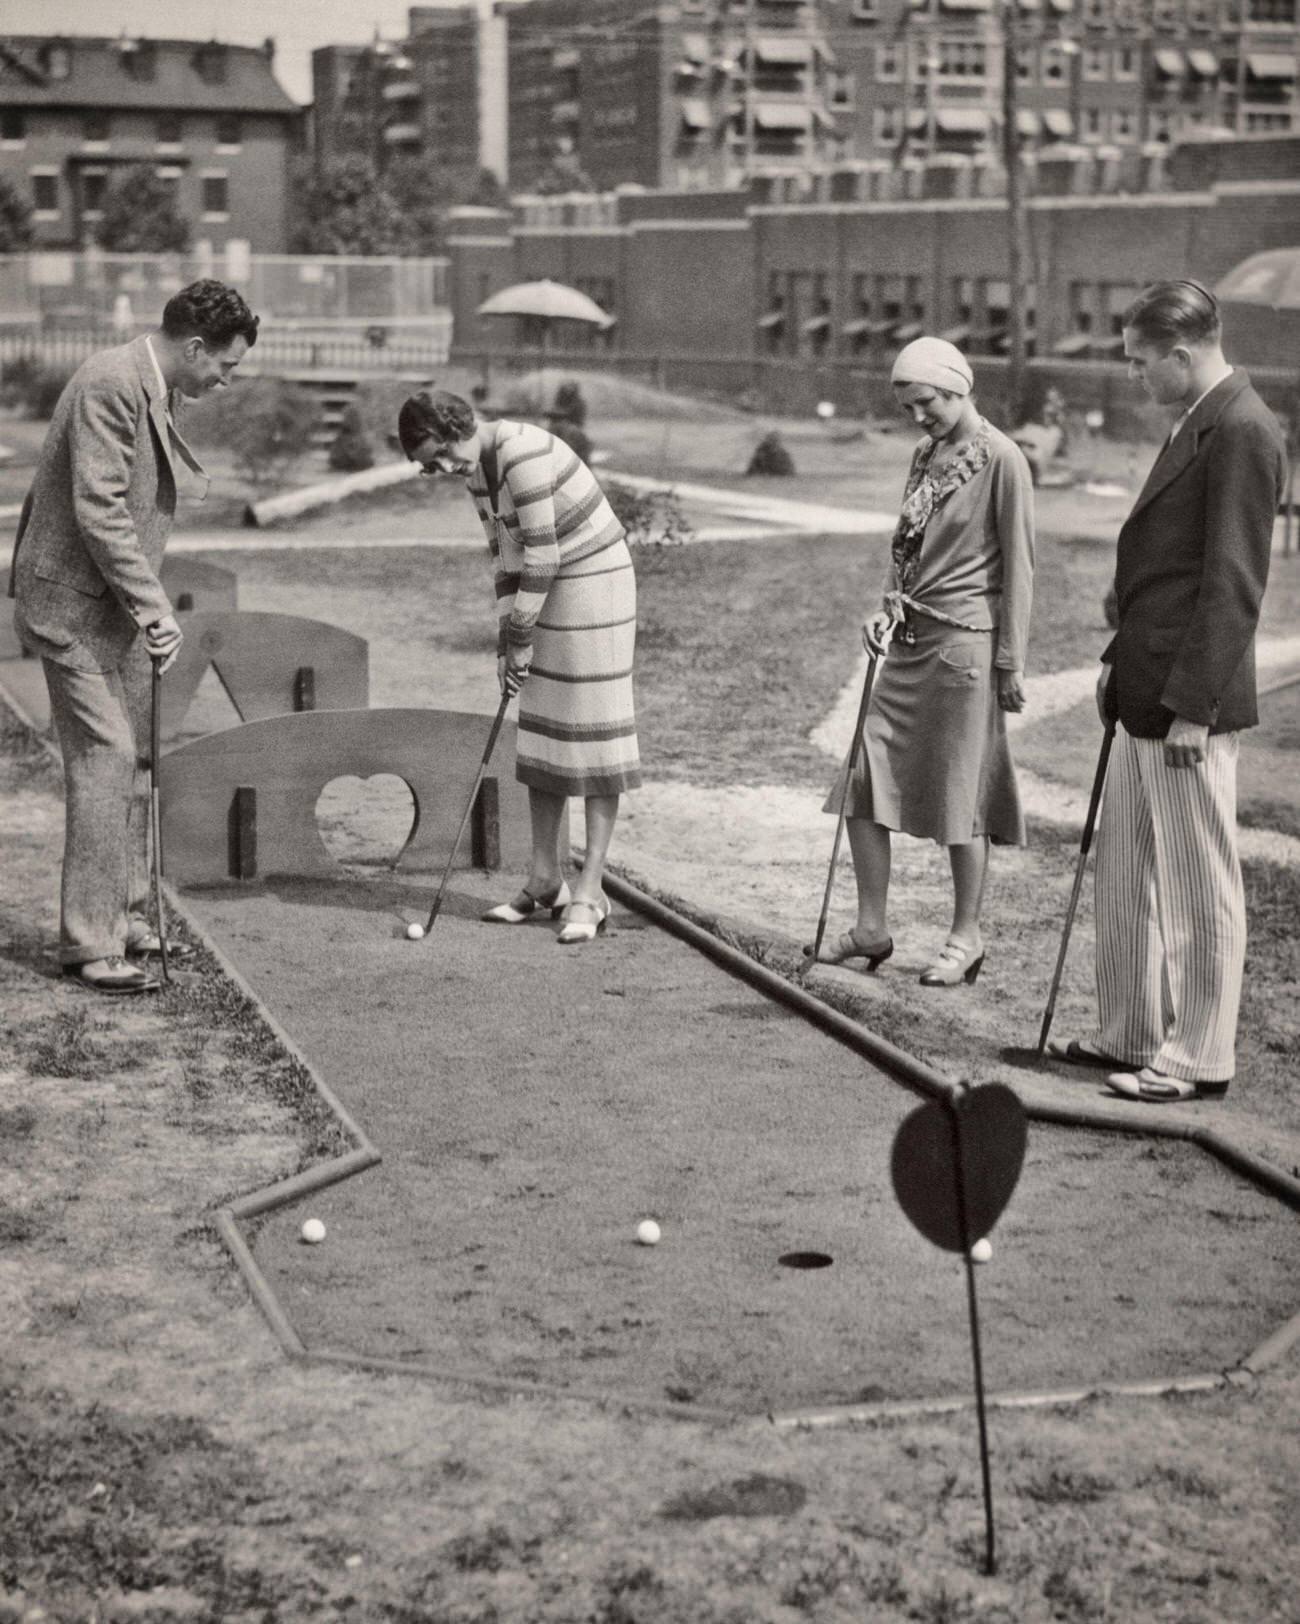 Two couples playing miniature golf, Philadelphia, PA, 1920s-1930s.